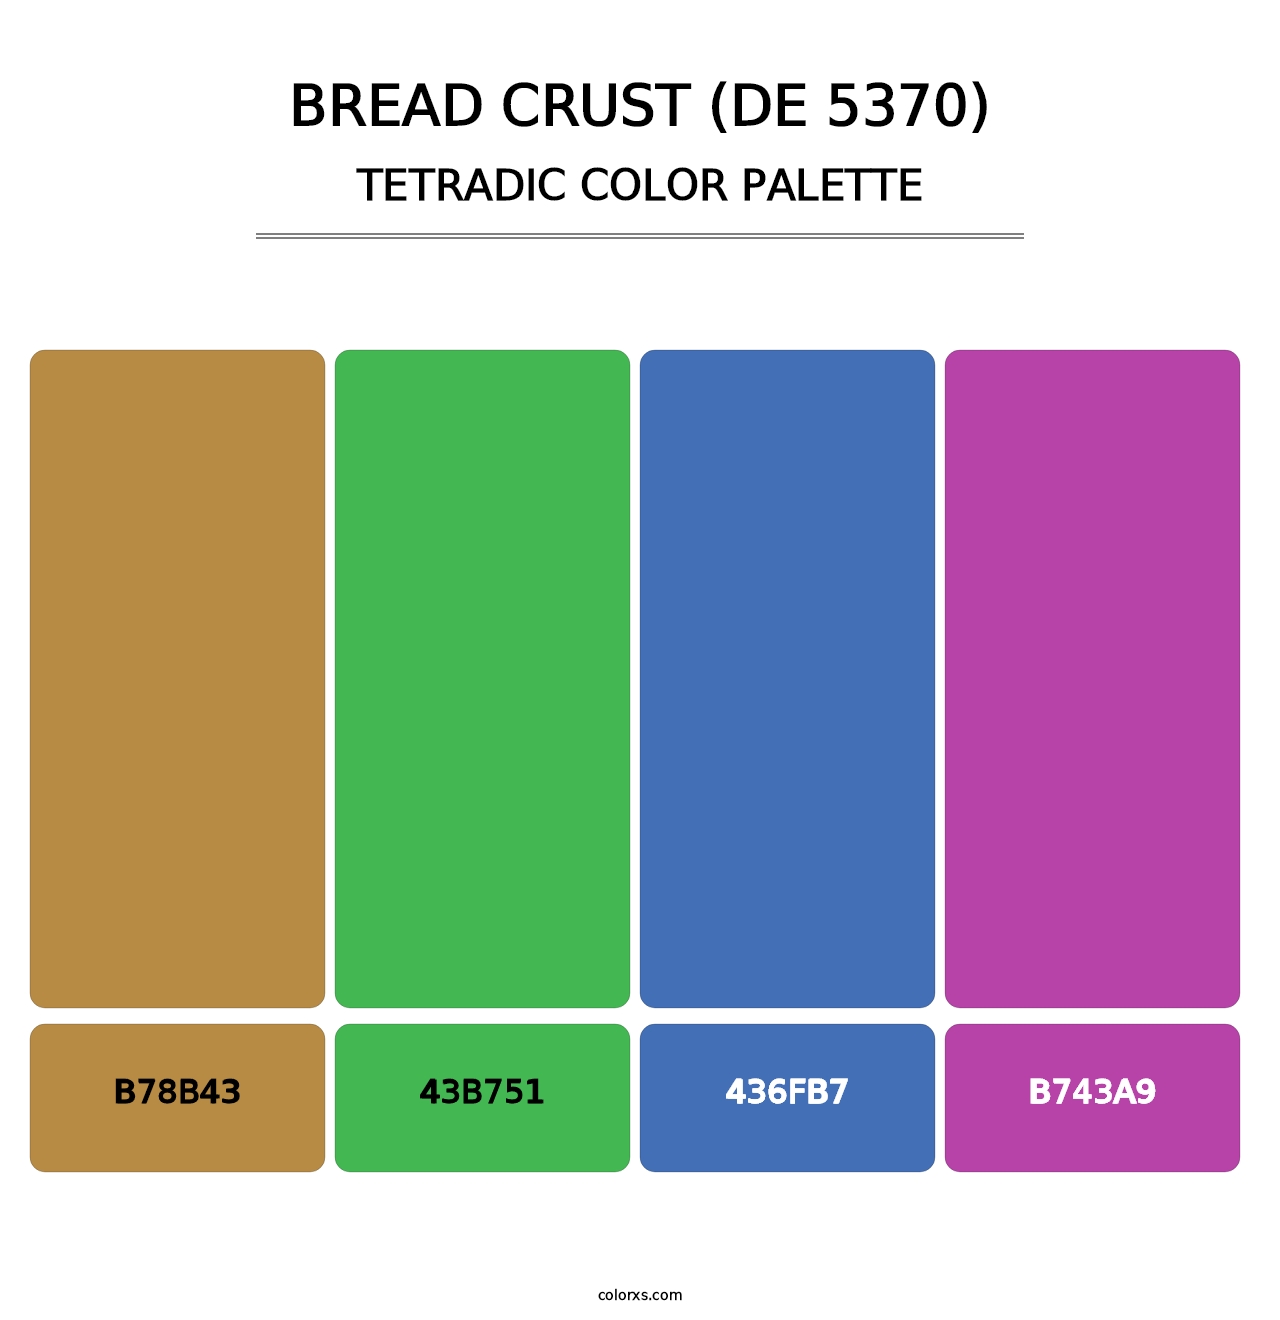 Bread Crust (DE 5370) - Tetradic Color Palette